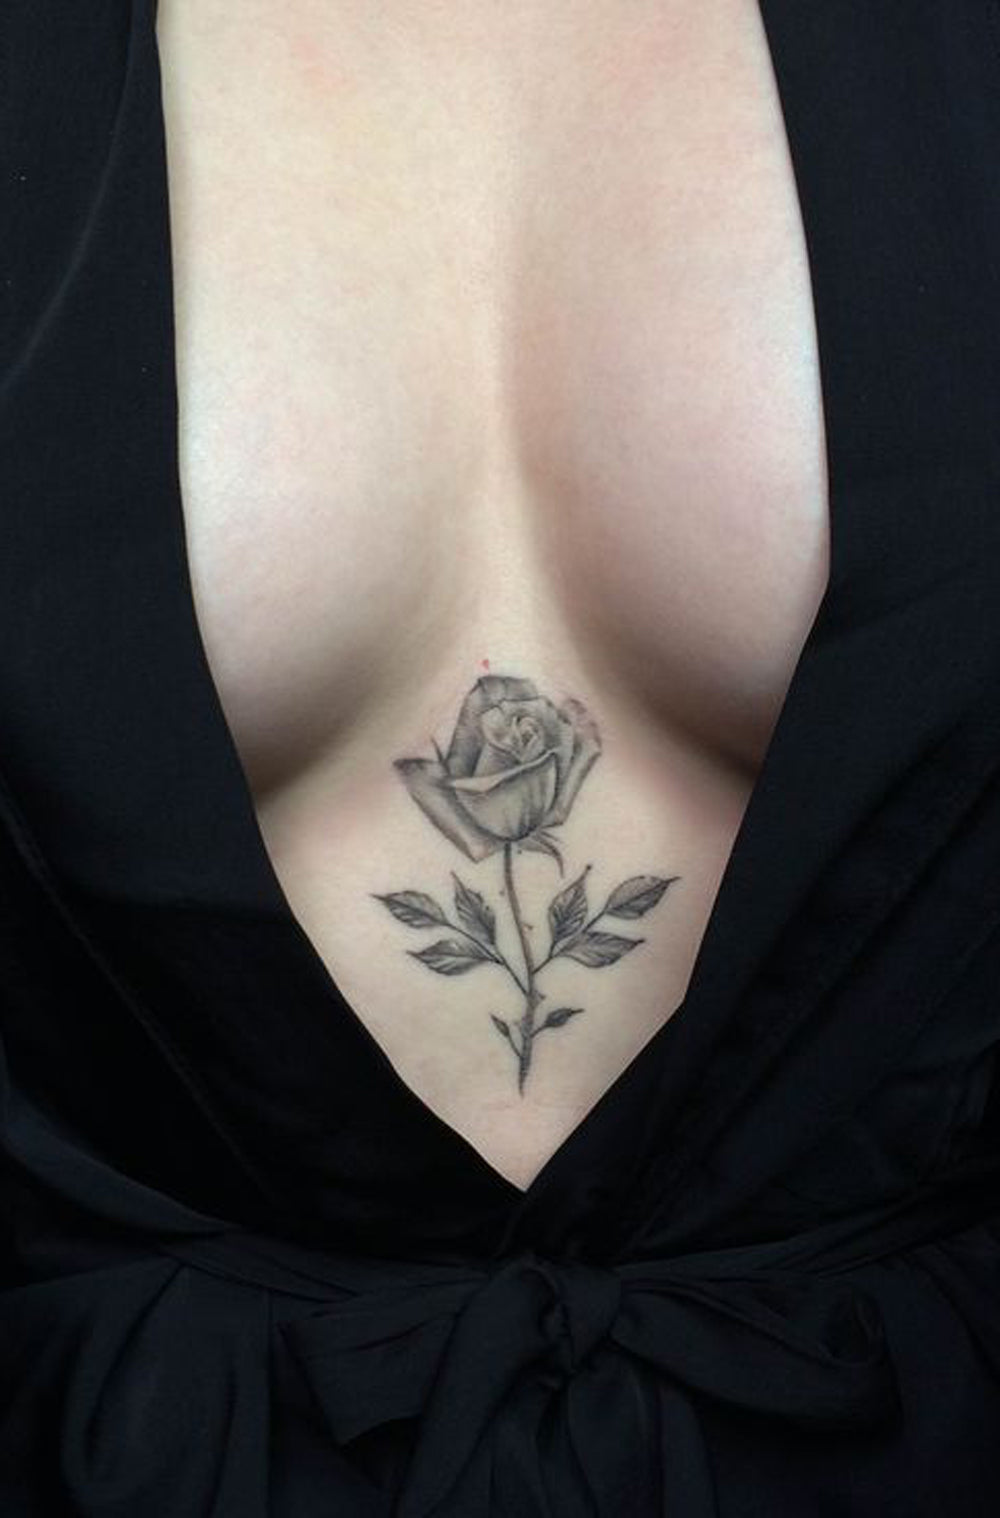 Realistic Single Tattoo Rose Sternum Tattoo Ideas for Teenagers - Small Delicate Feminine Floral Flower Underboob Tatt -  ideas realistas de tatuaje de rose solo pecho - www.MyBodiArt.com 